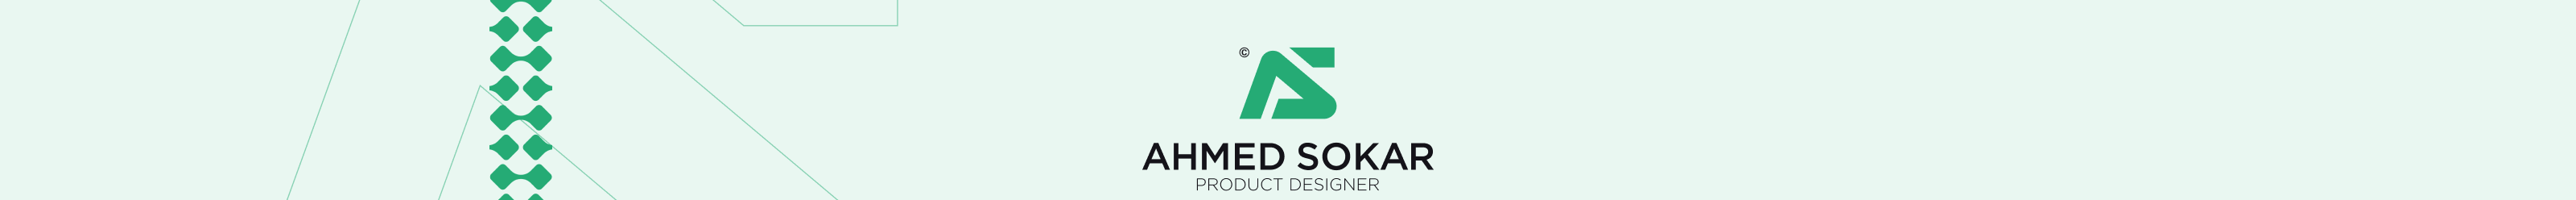 Ahmed Sokar のプロファイルバナー